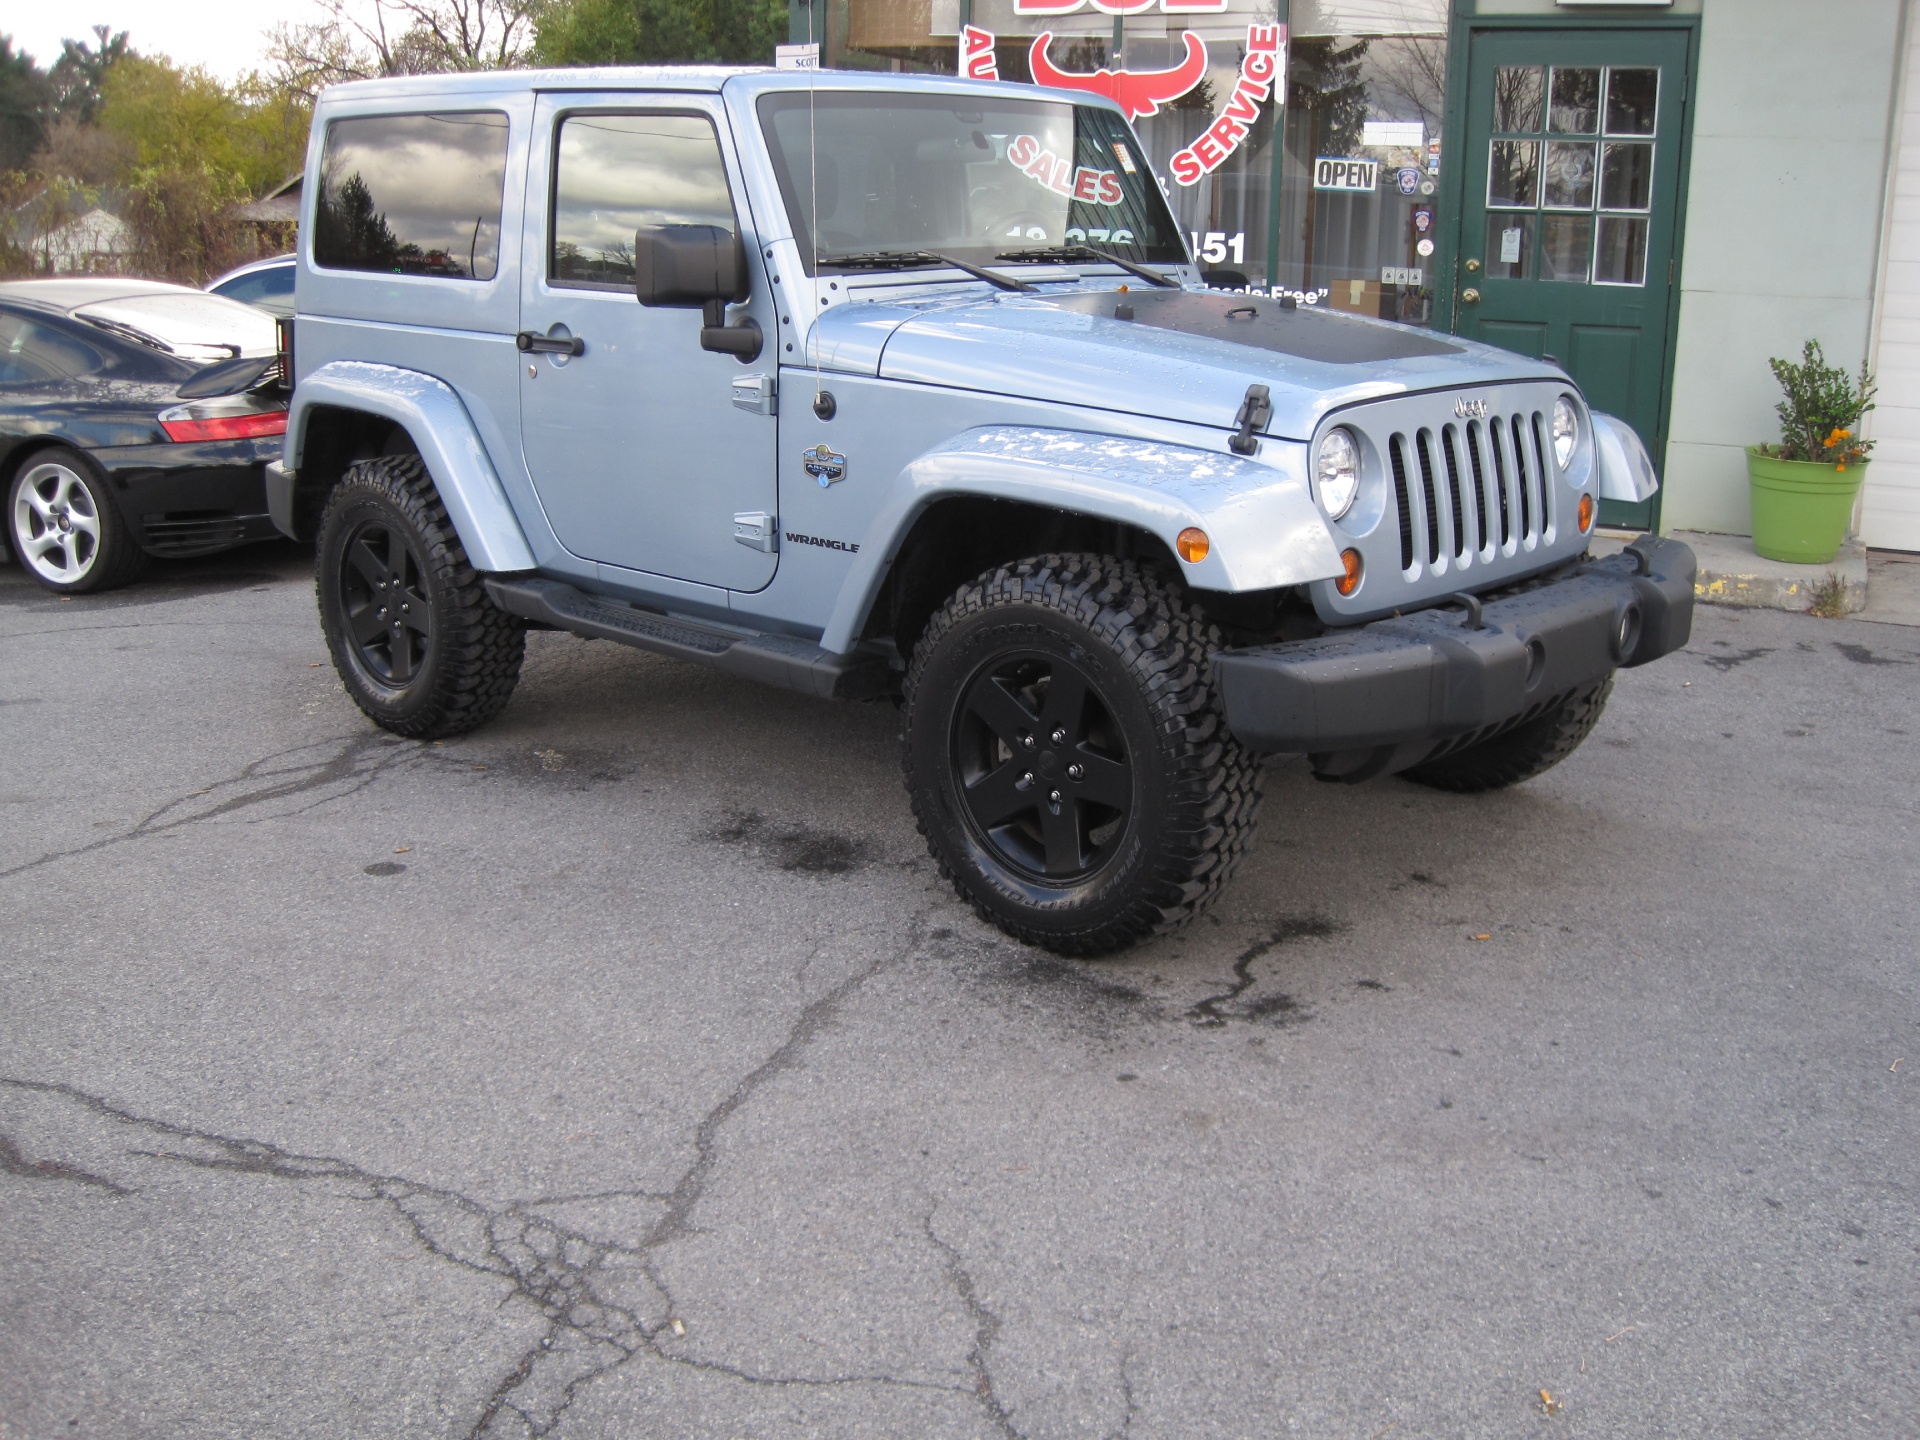 2012 Jeep Wrangler For Sale $27990 | 14198 Bul Auto NY